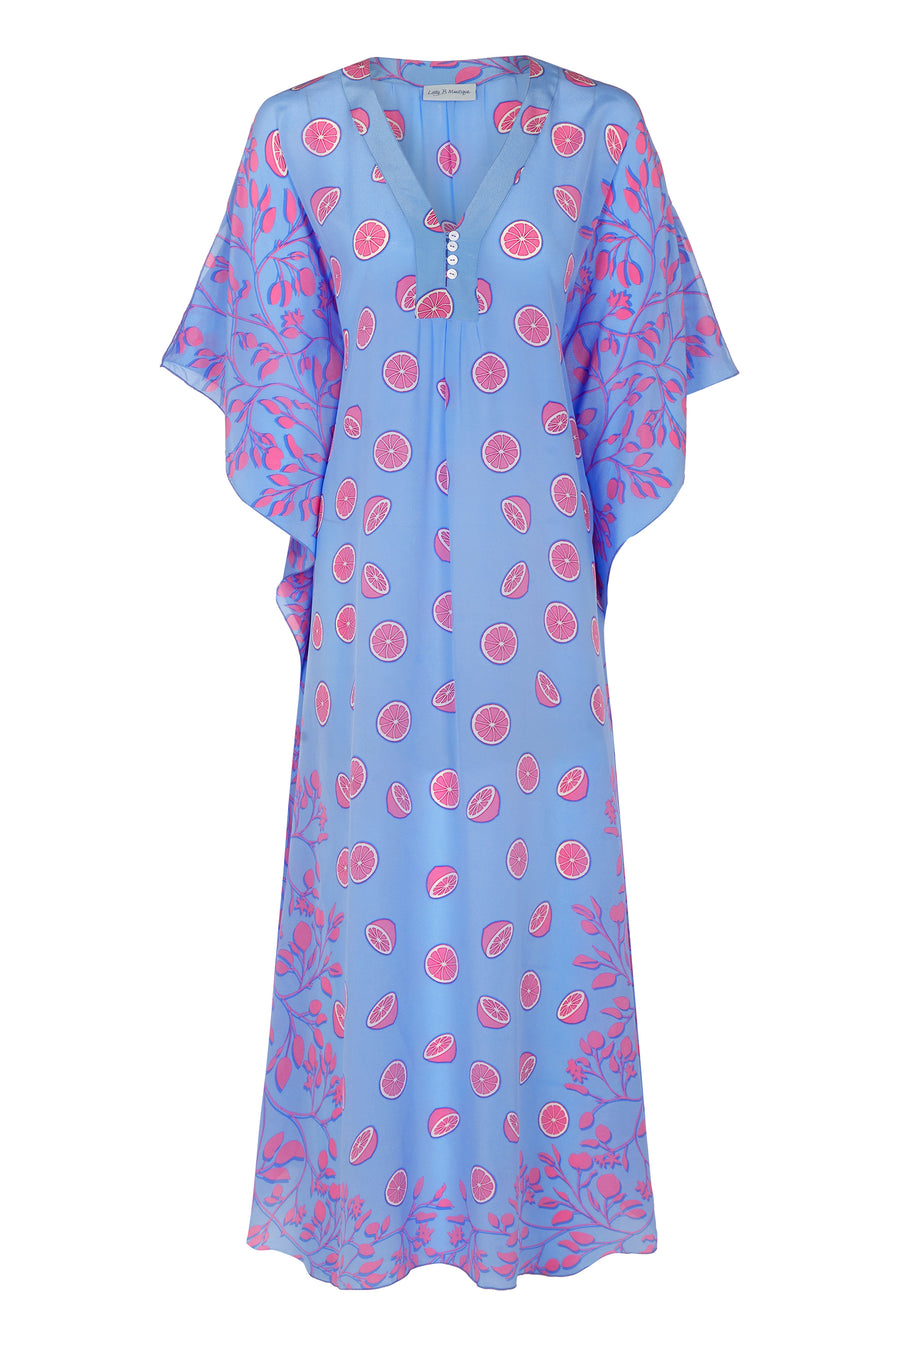 Summer wedding party silk kaftan in Lime Slice blue & pink print by Lotty B Mustique